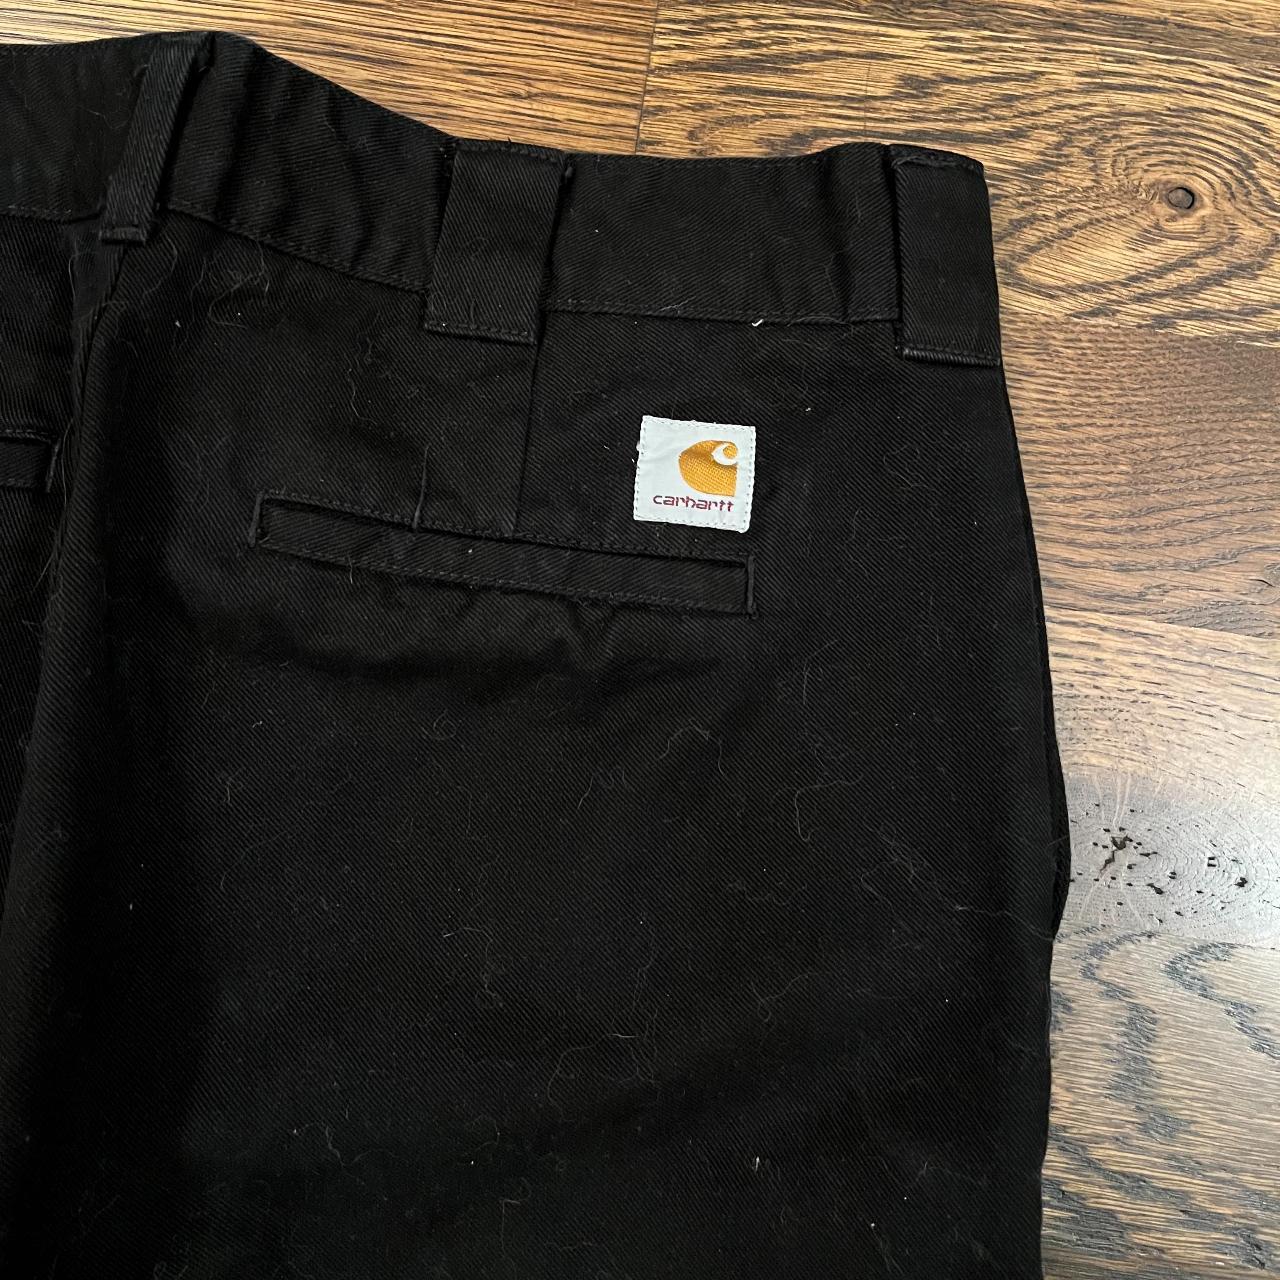 Carhartt WIP Men's Black Trousers (2)